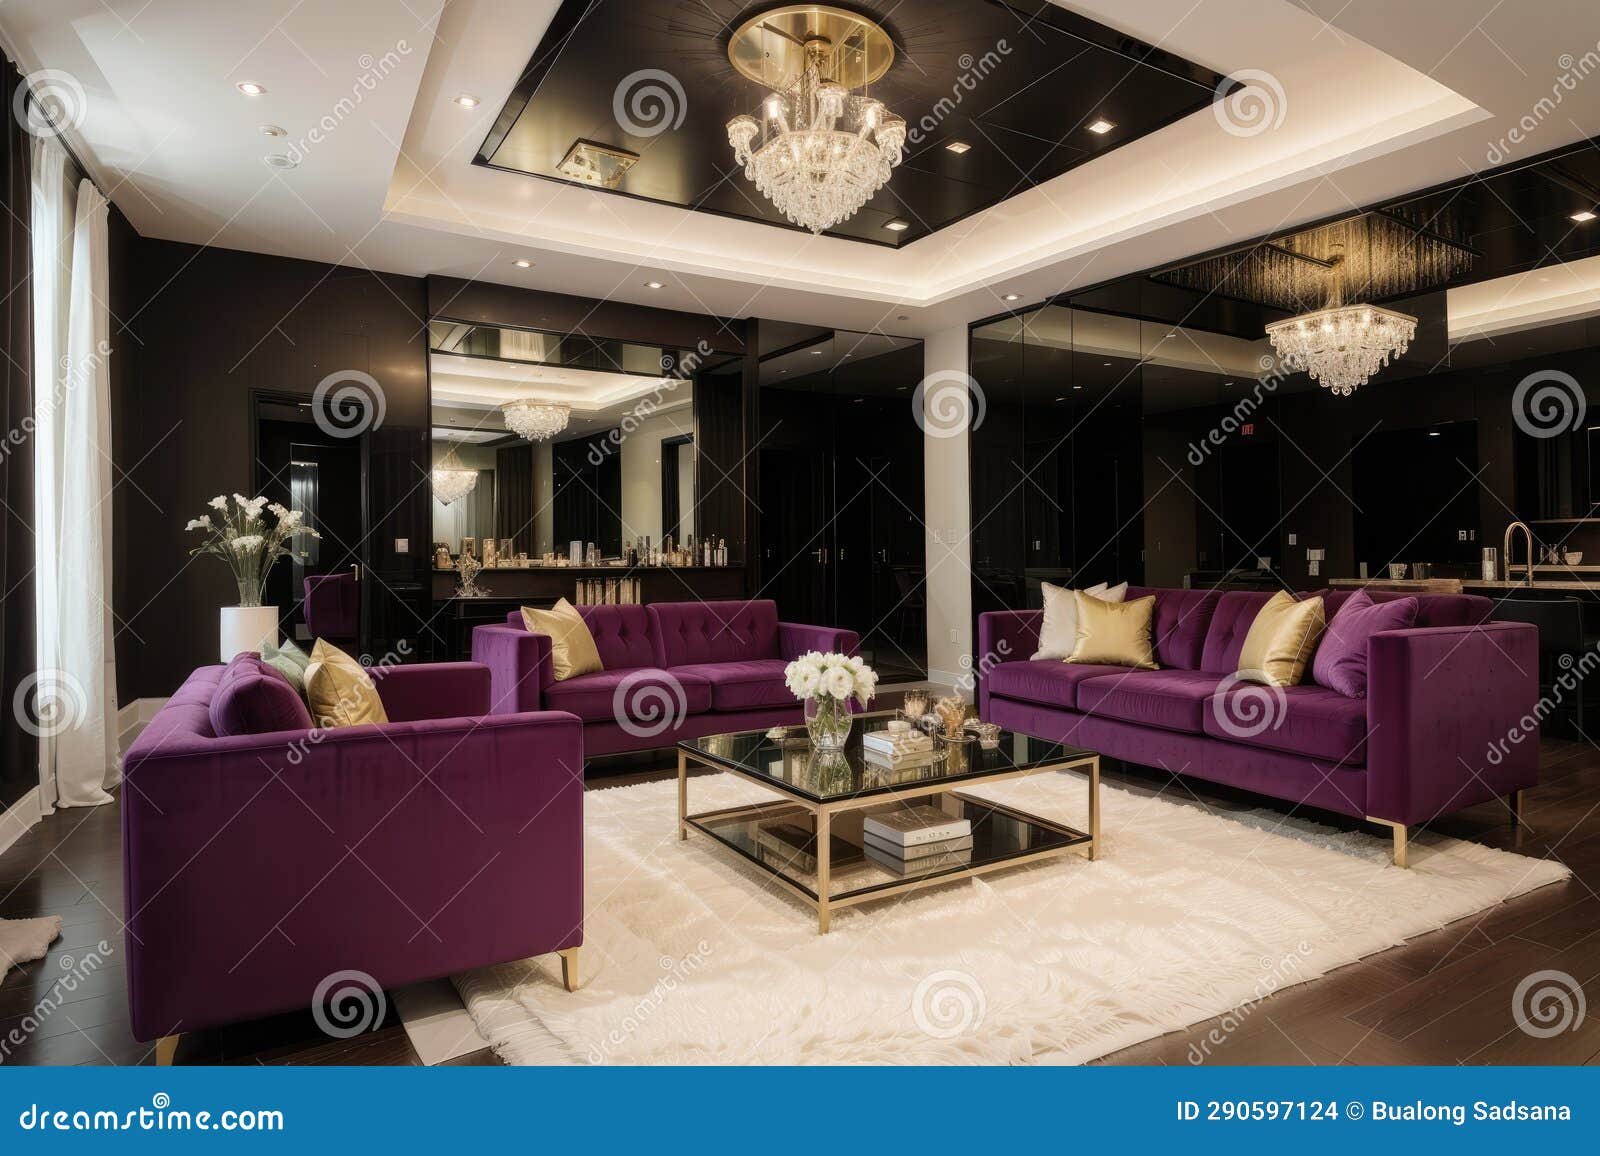 Showcasing Interior Design in Style Lavish Lounge Stock Illustration ...